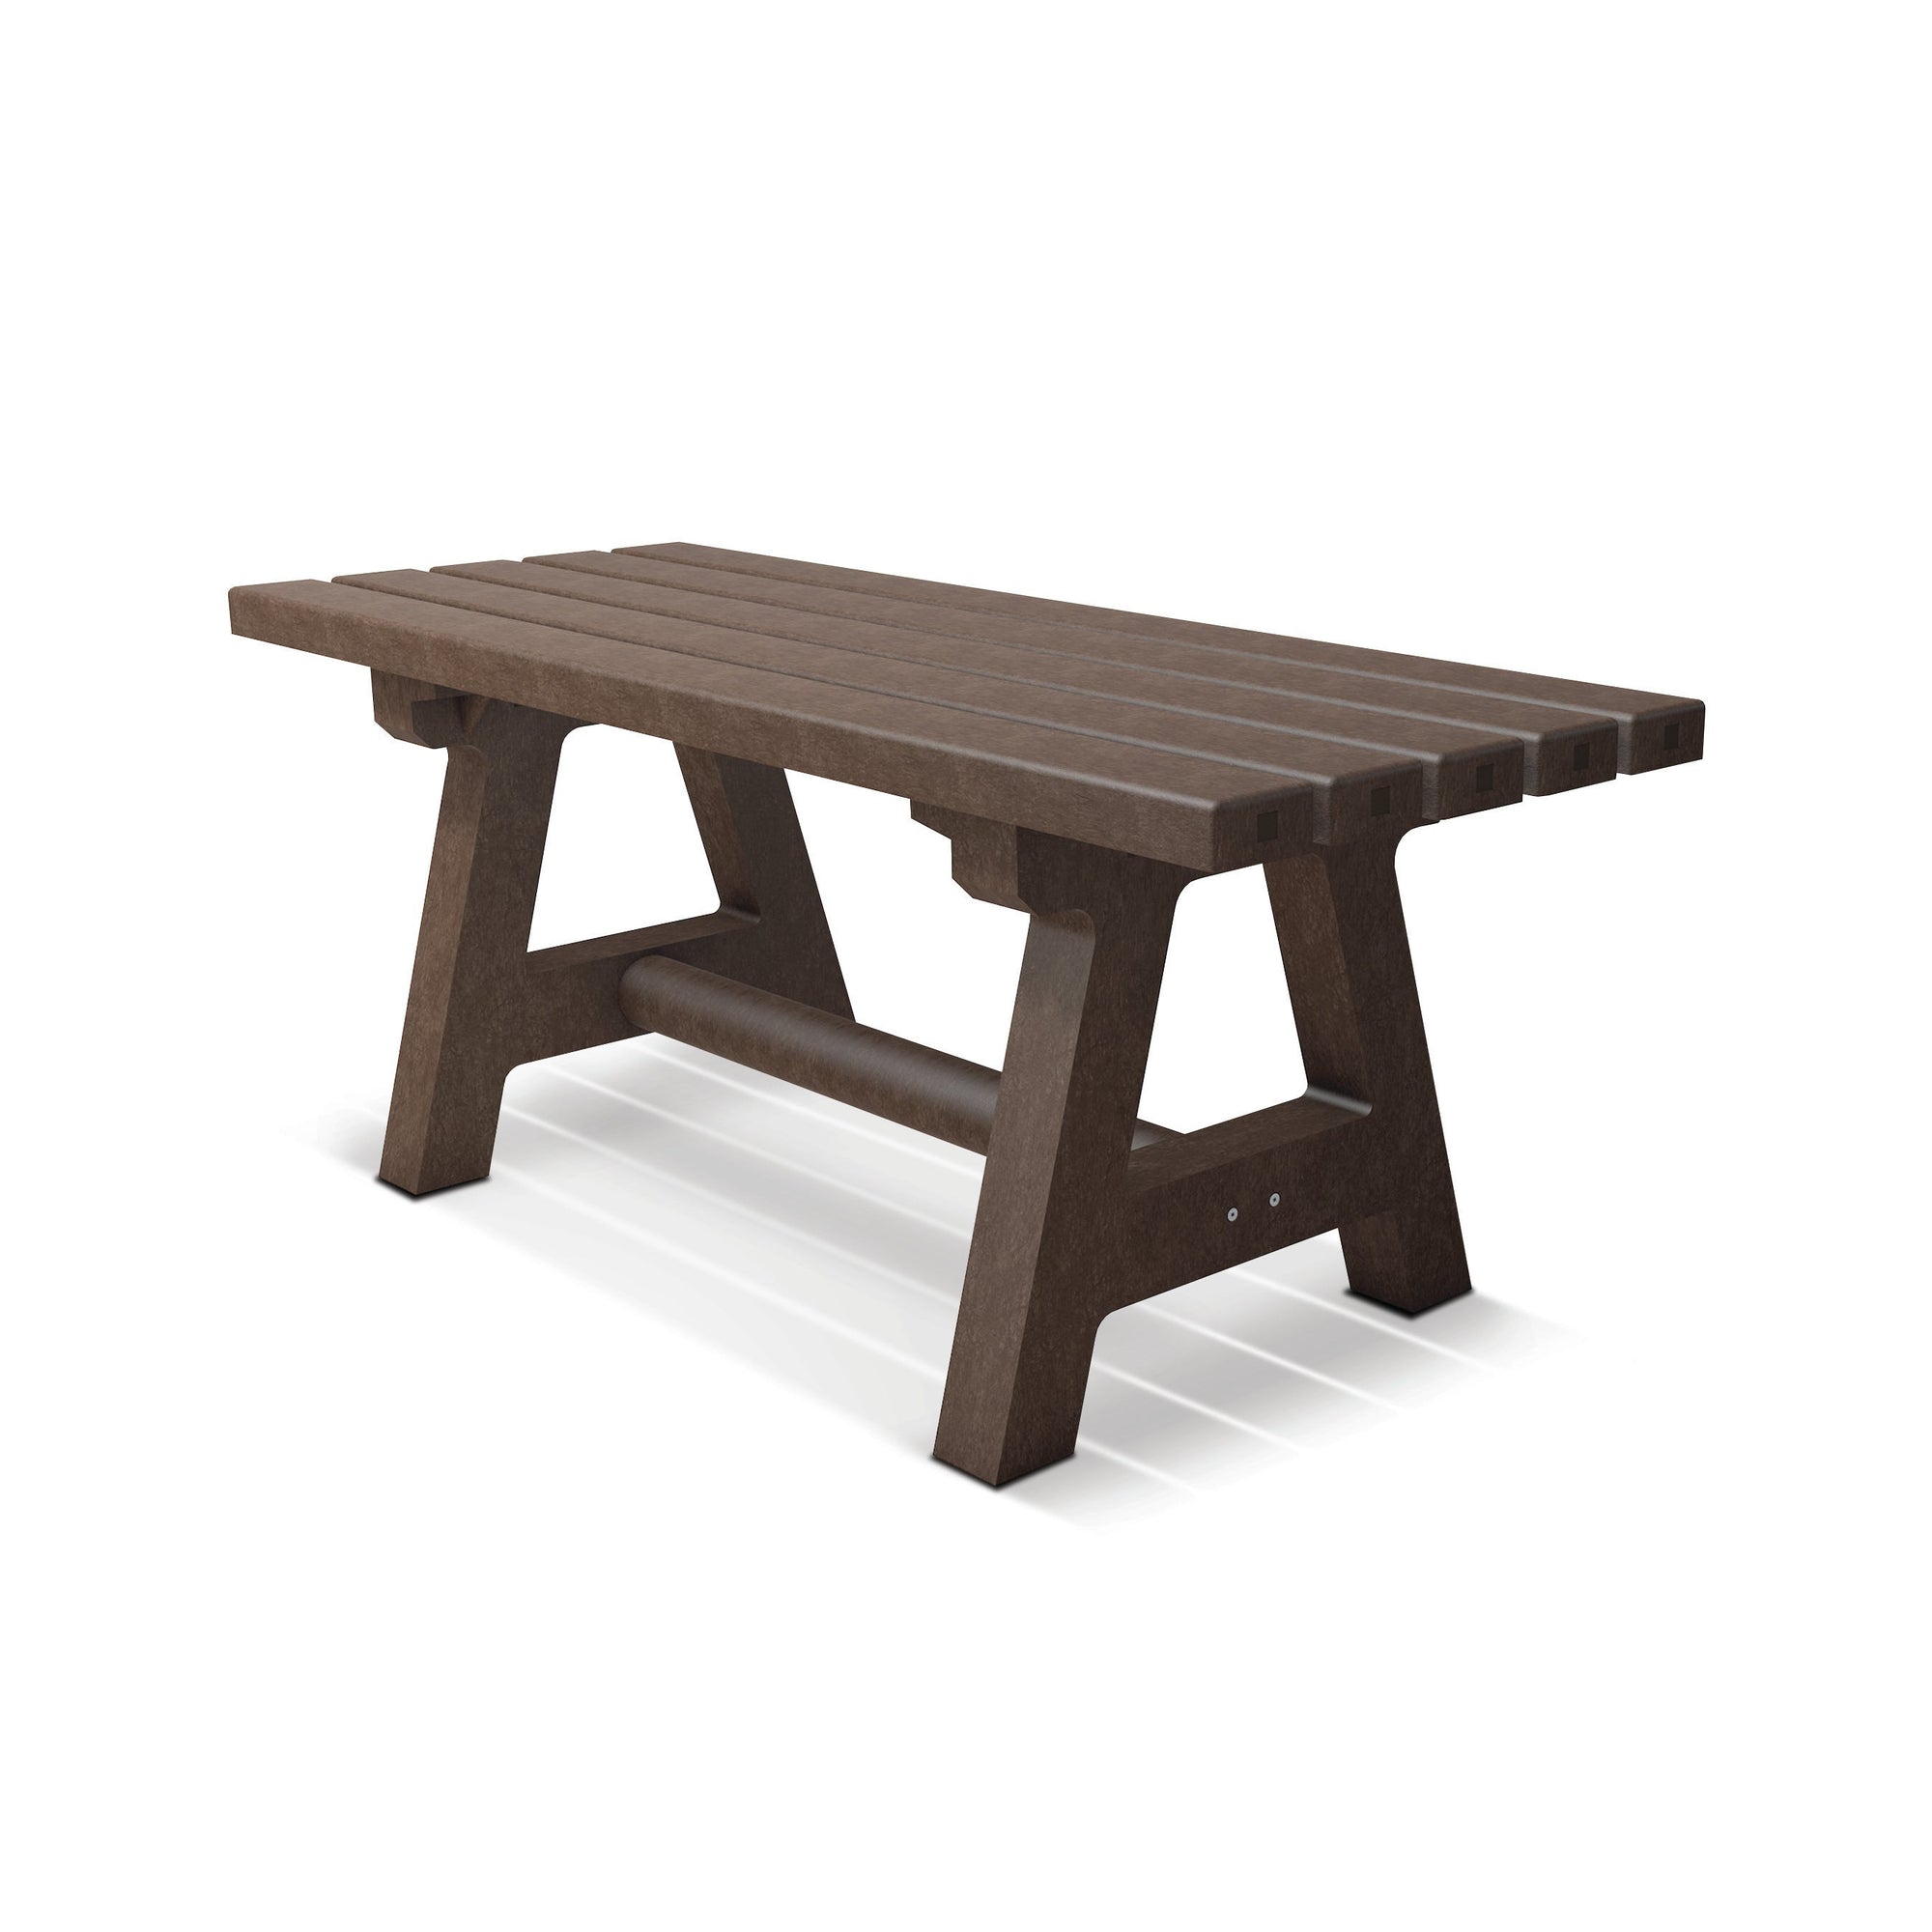 Recycled Plastic Lumber Outdoor Table, PreK-2